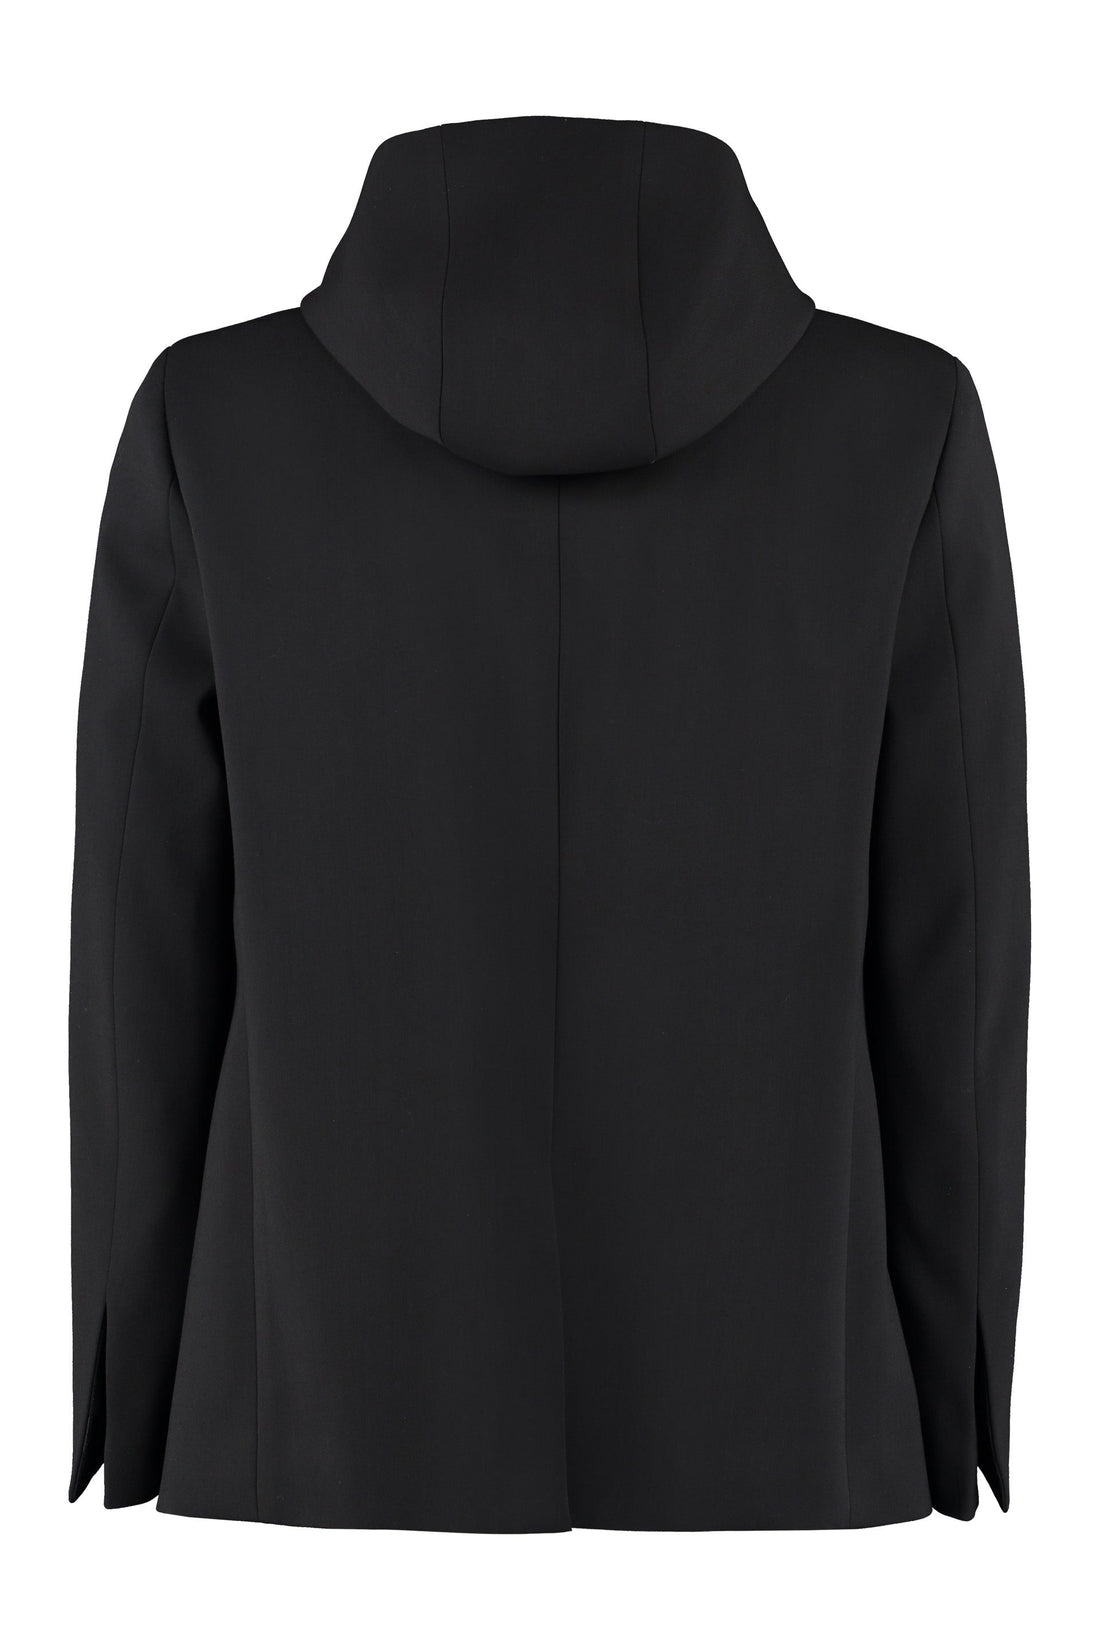 Givenchy-OUTLET-SALE-Virgin wool jacket-ARCHIVIST